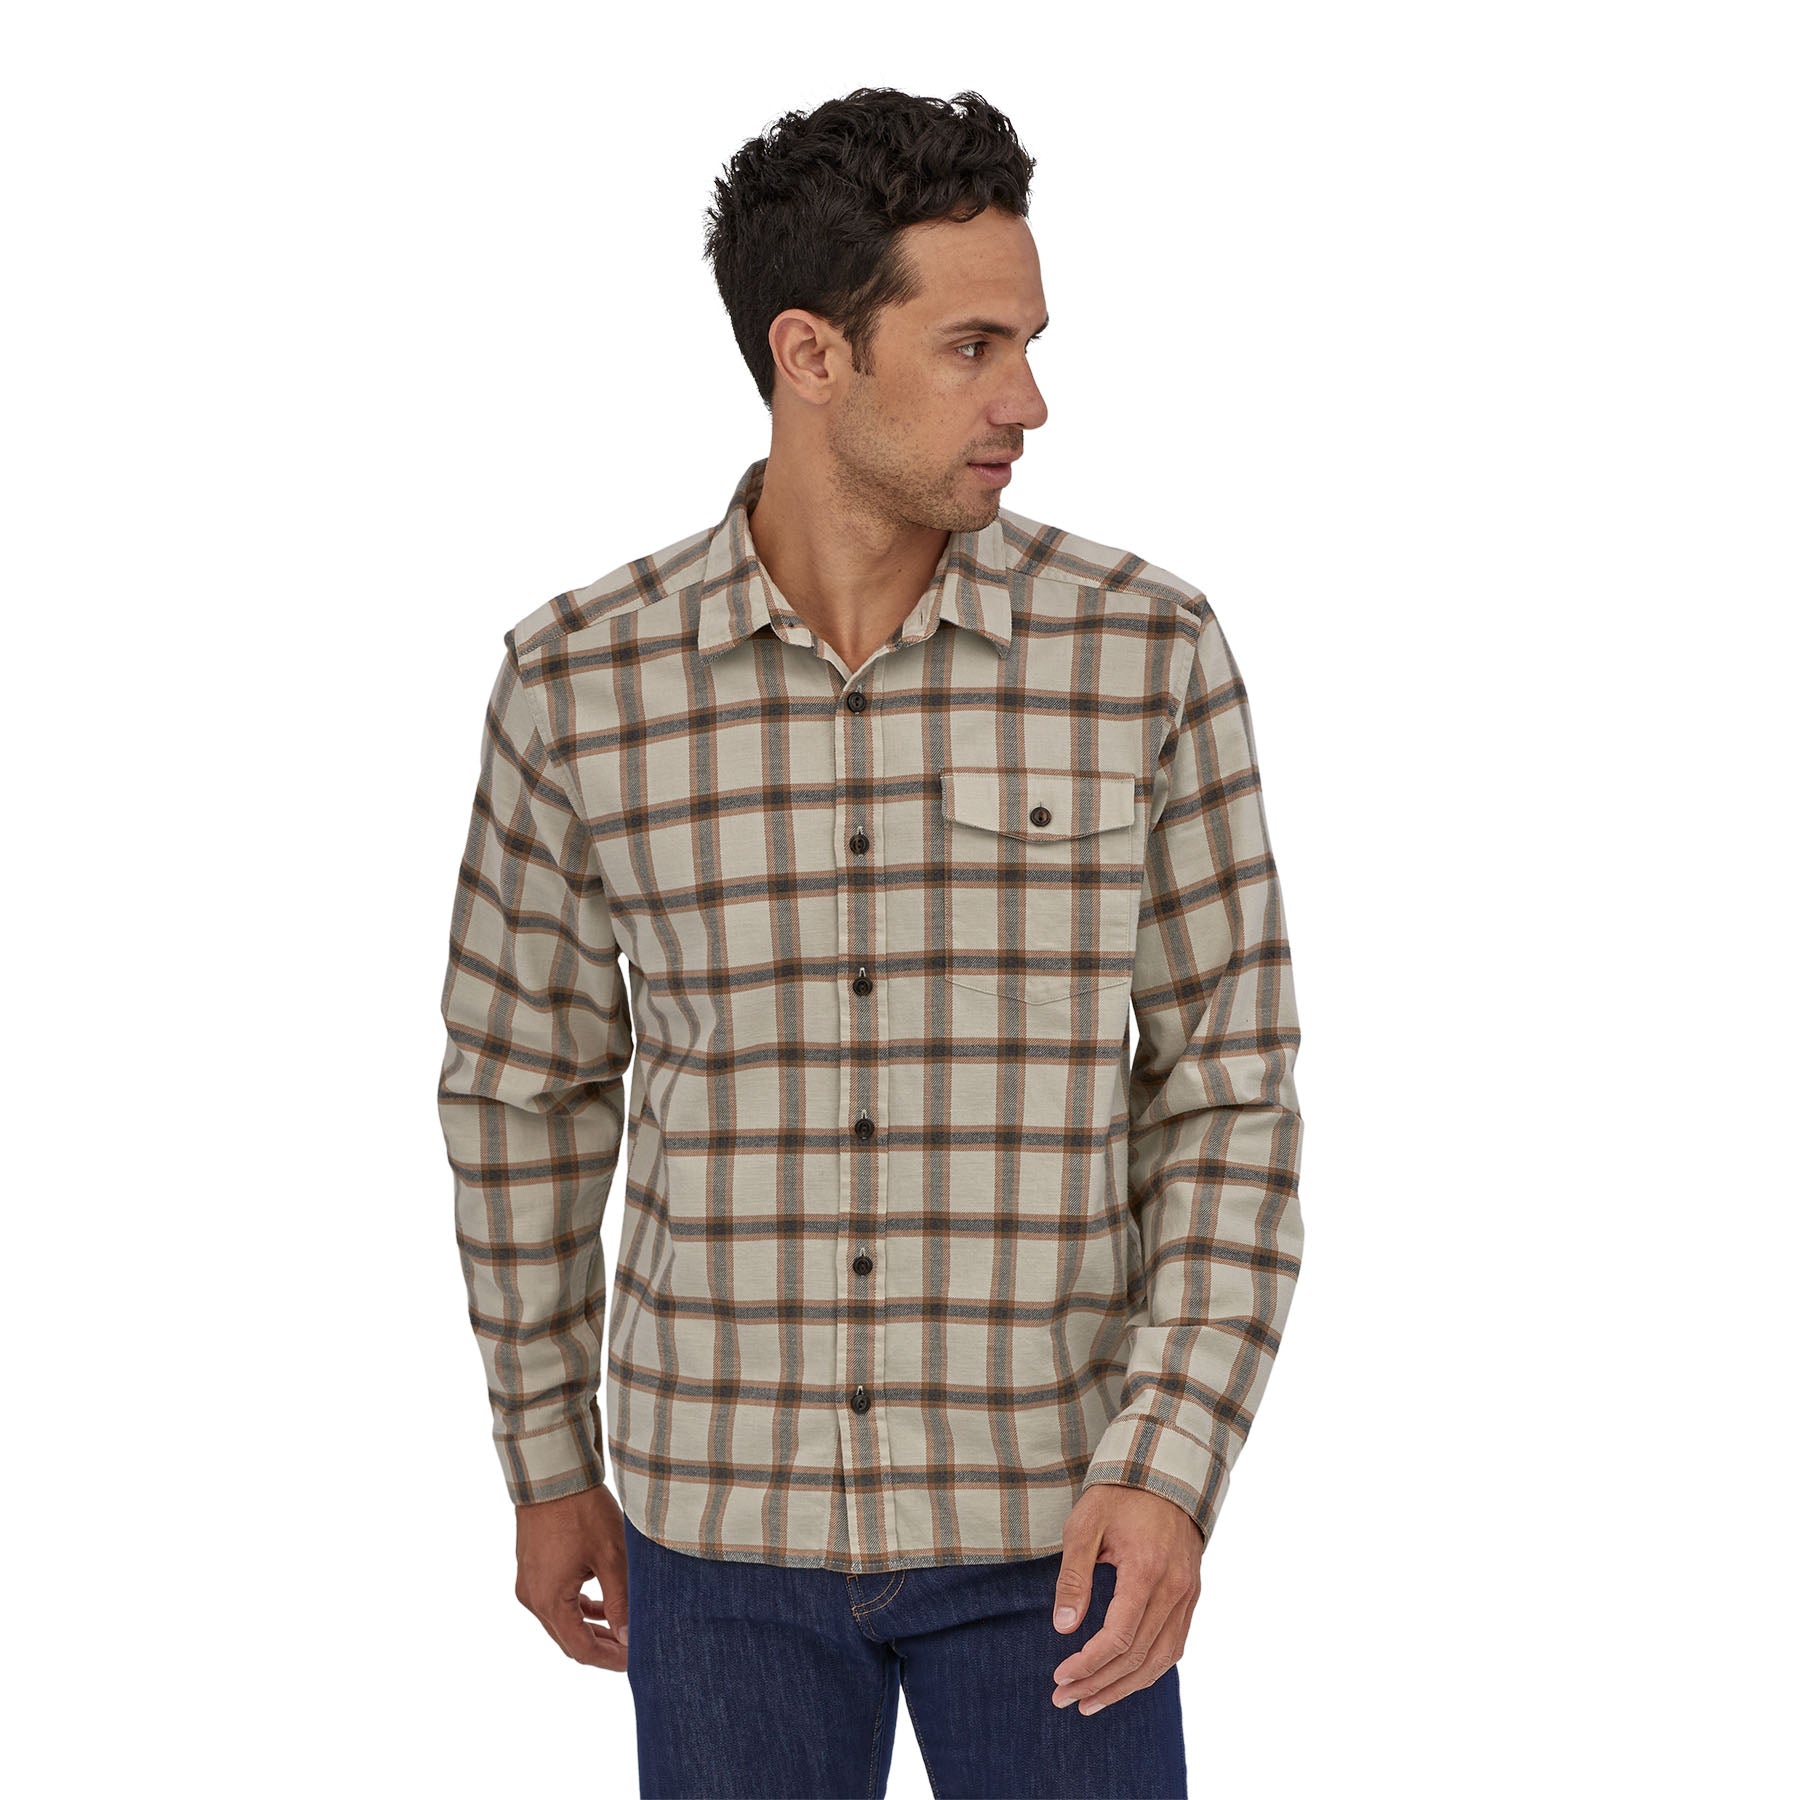 Patagonia Men's Long-Sleeved Flannel Shirt - 100% organic cotton - Weekendbee - sustainable sportswear